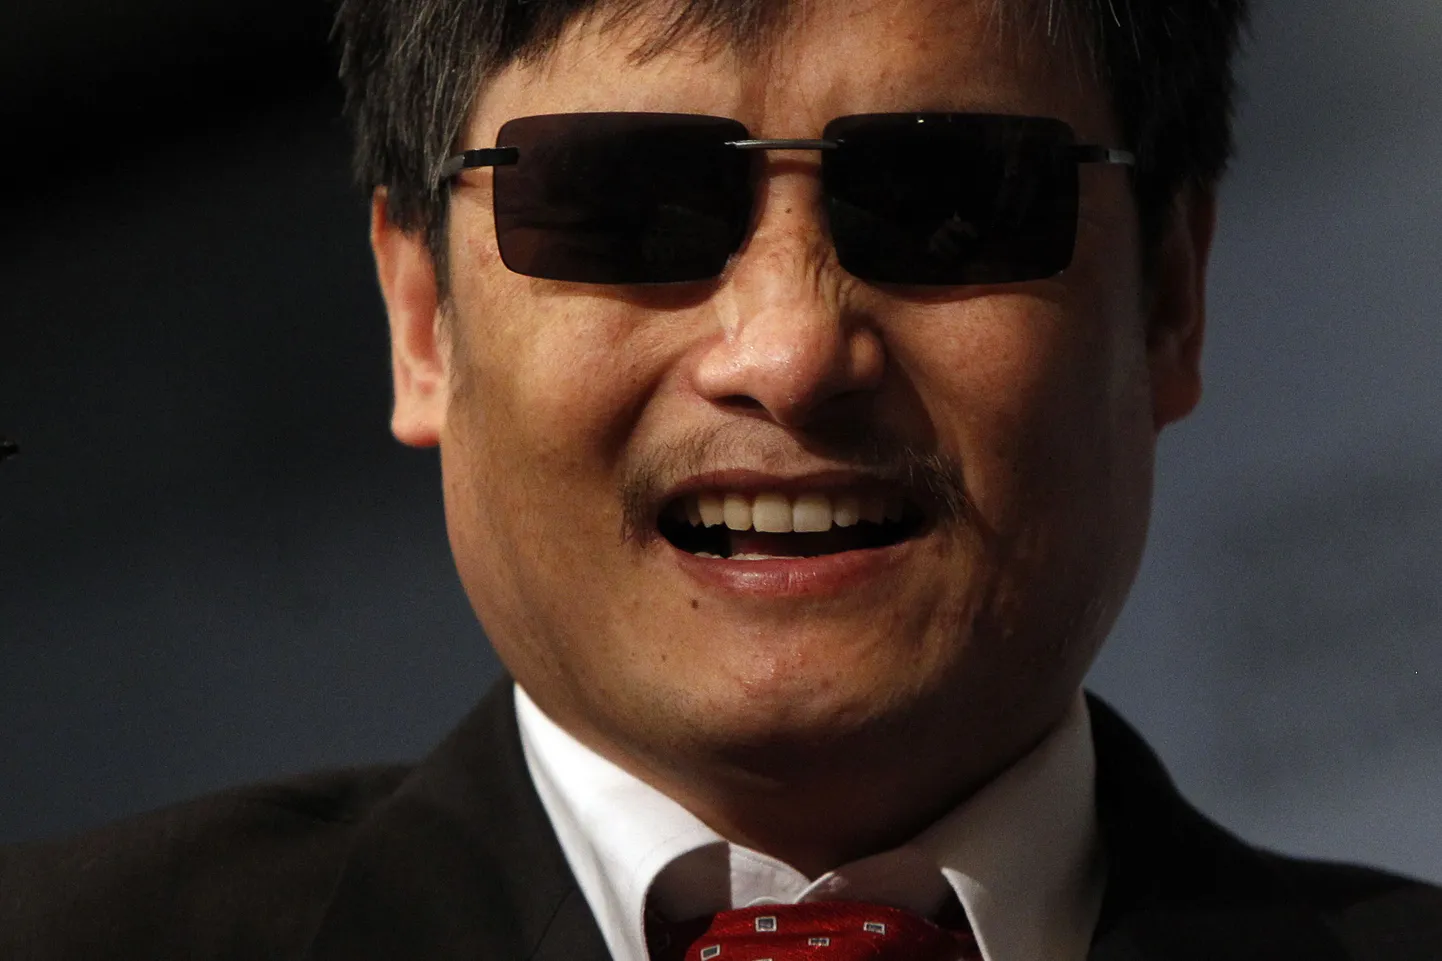 Chen Guangcheng.